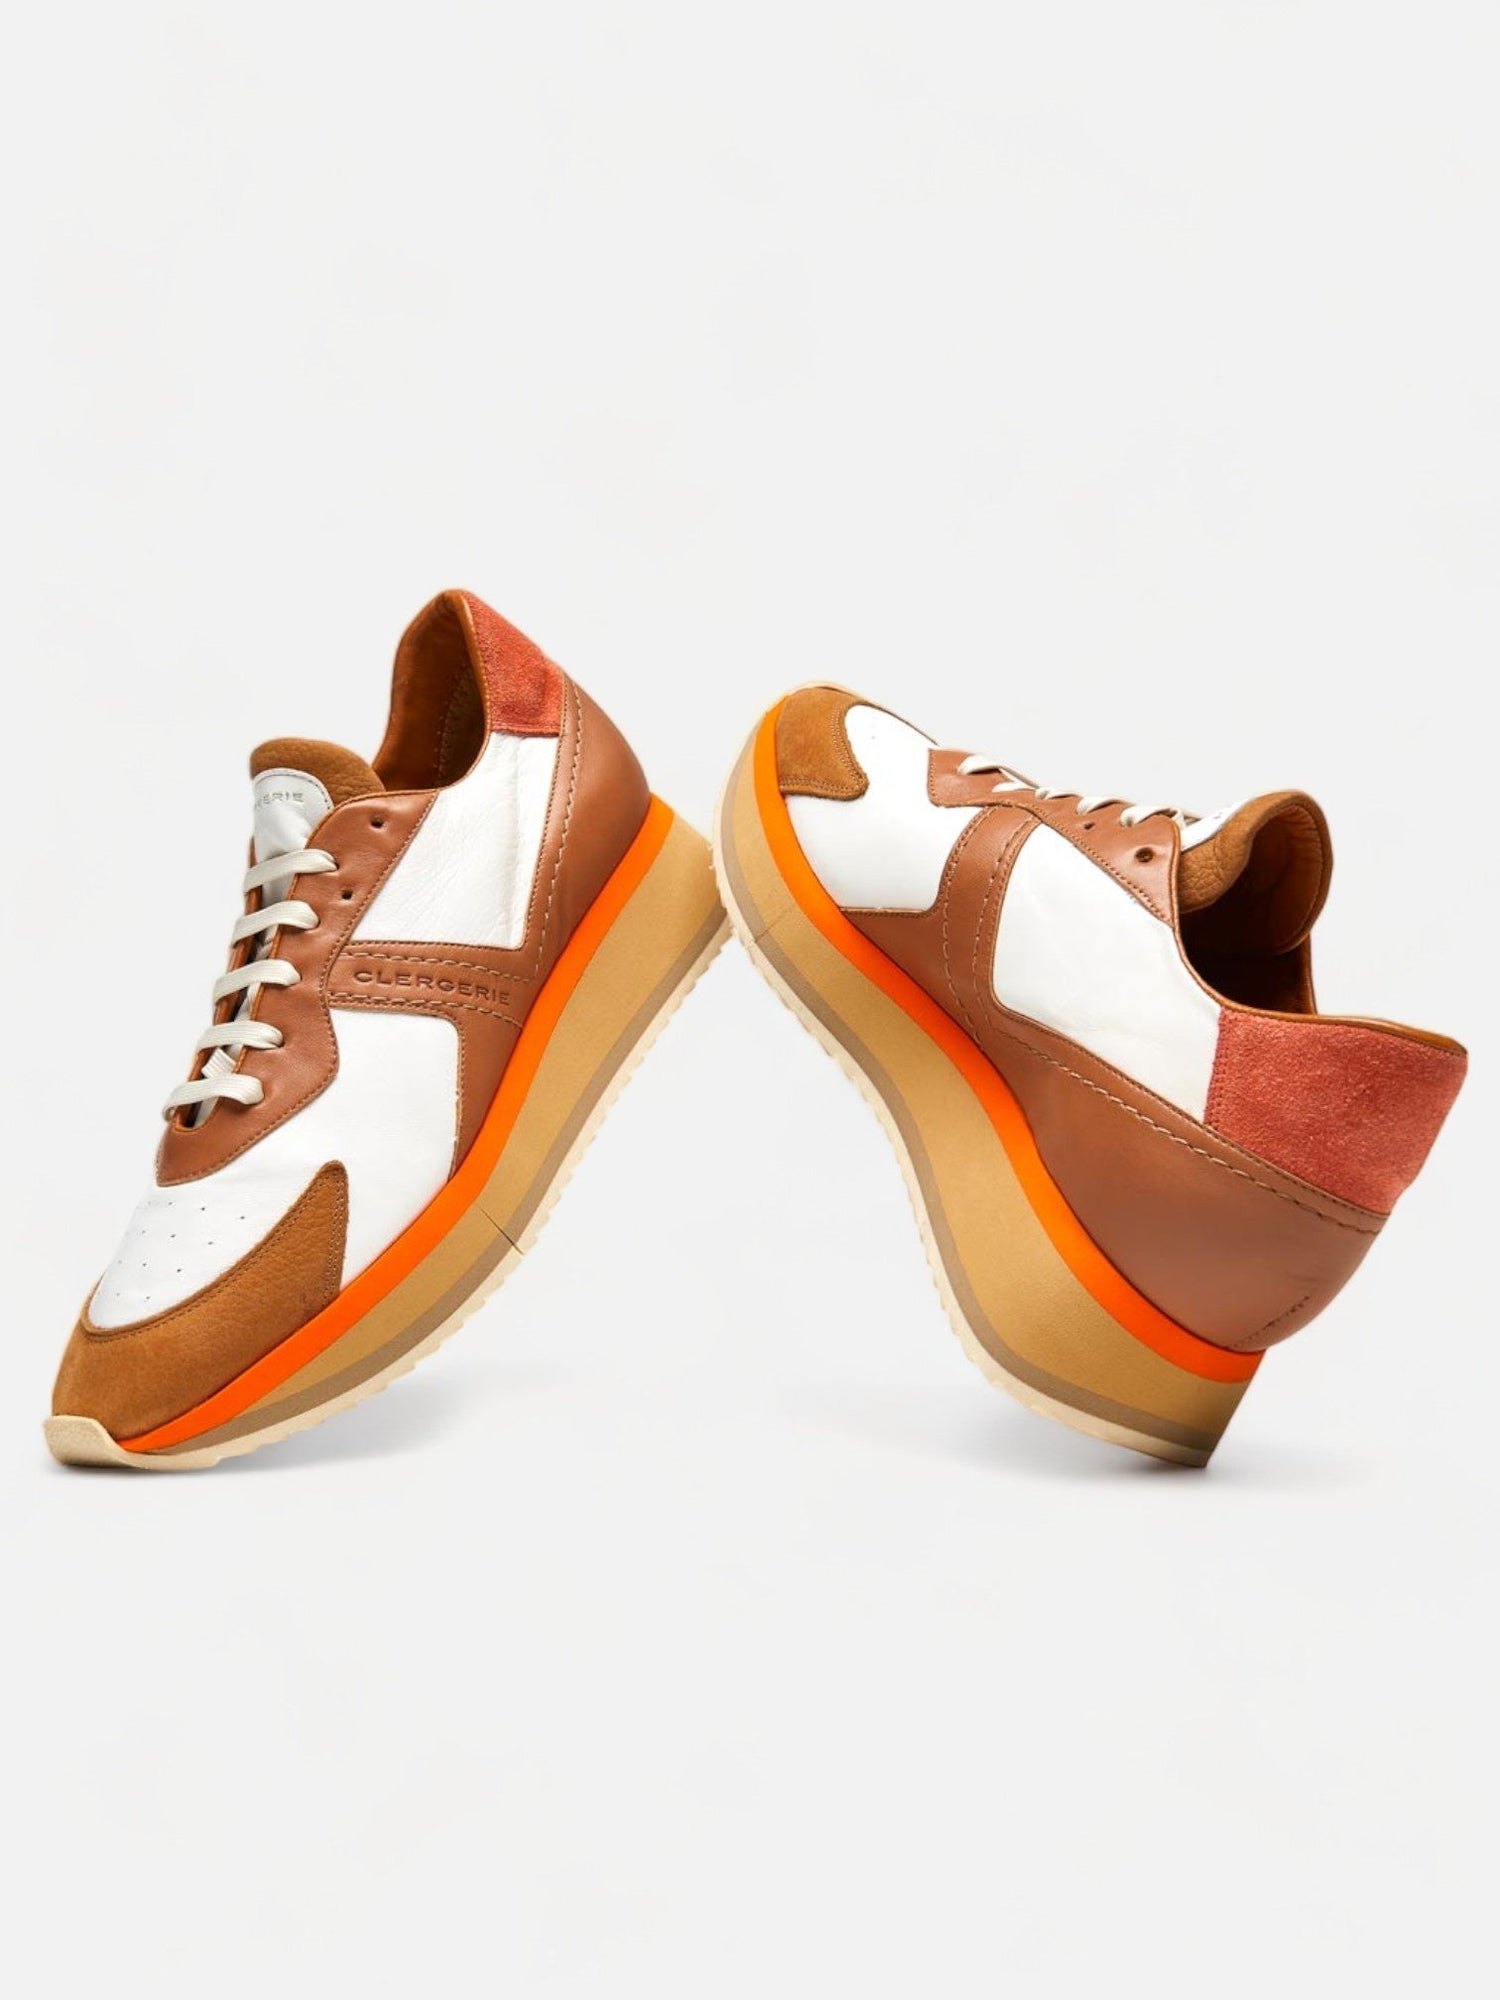 SNEAKERS - ORVIL snearkers, brown &amp; white - 3606064005653 - Clergerie Paris - Europe